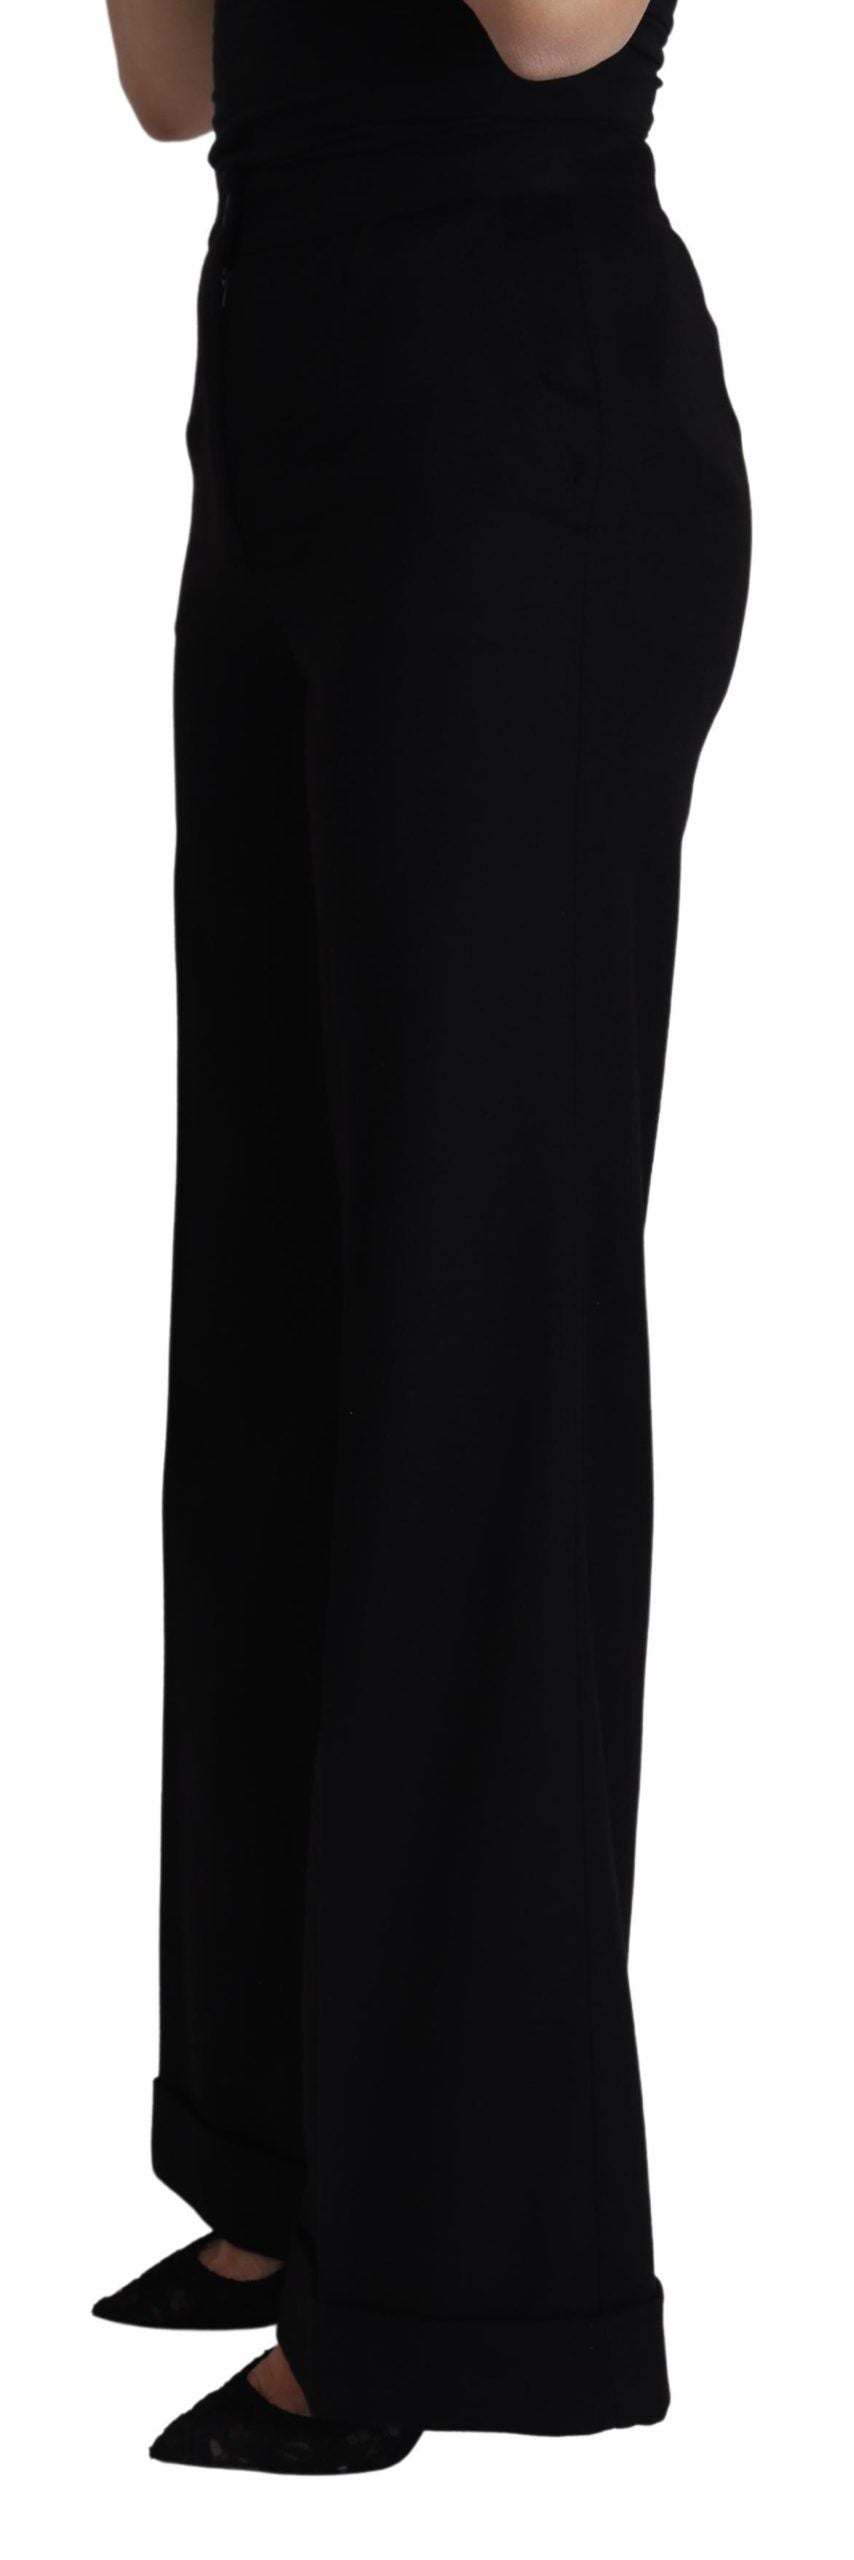 Dolce & Gabbana Black Cashmere Wide Leg Women Trouser Pants